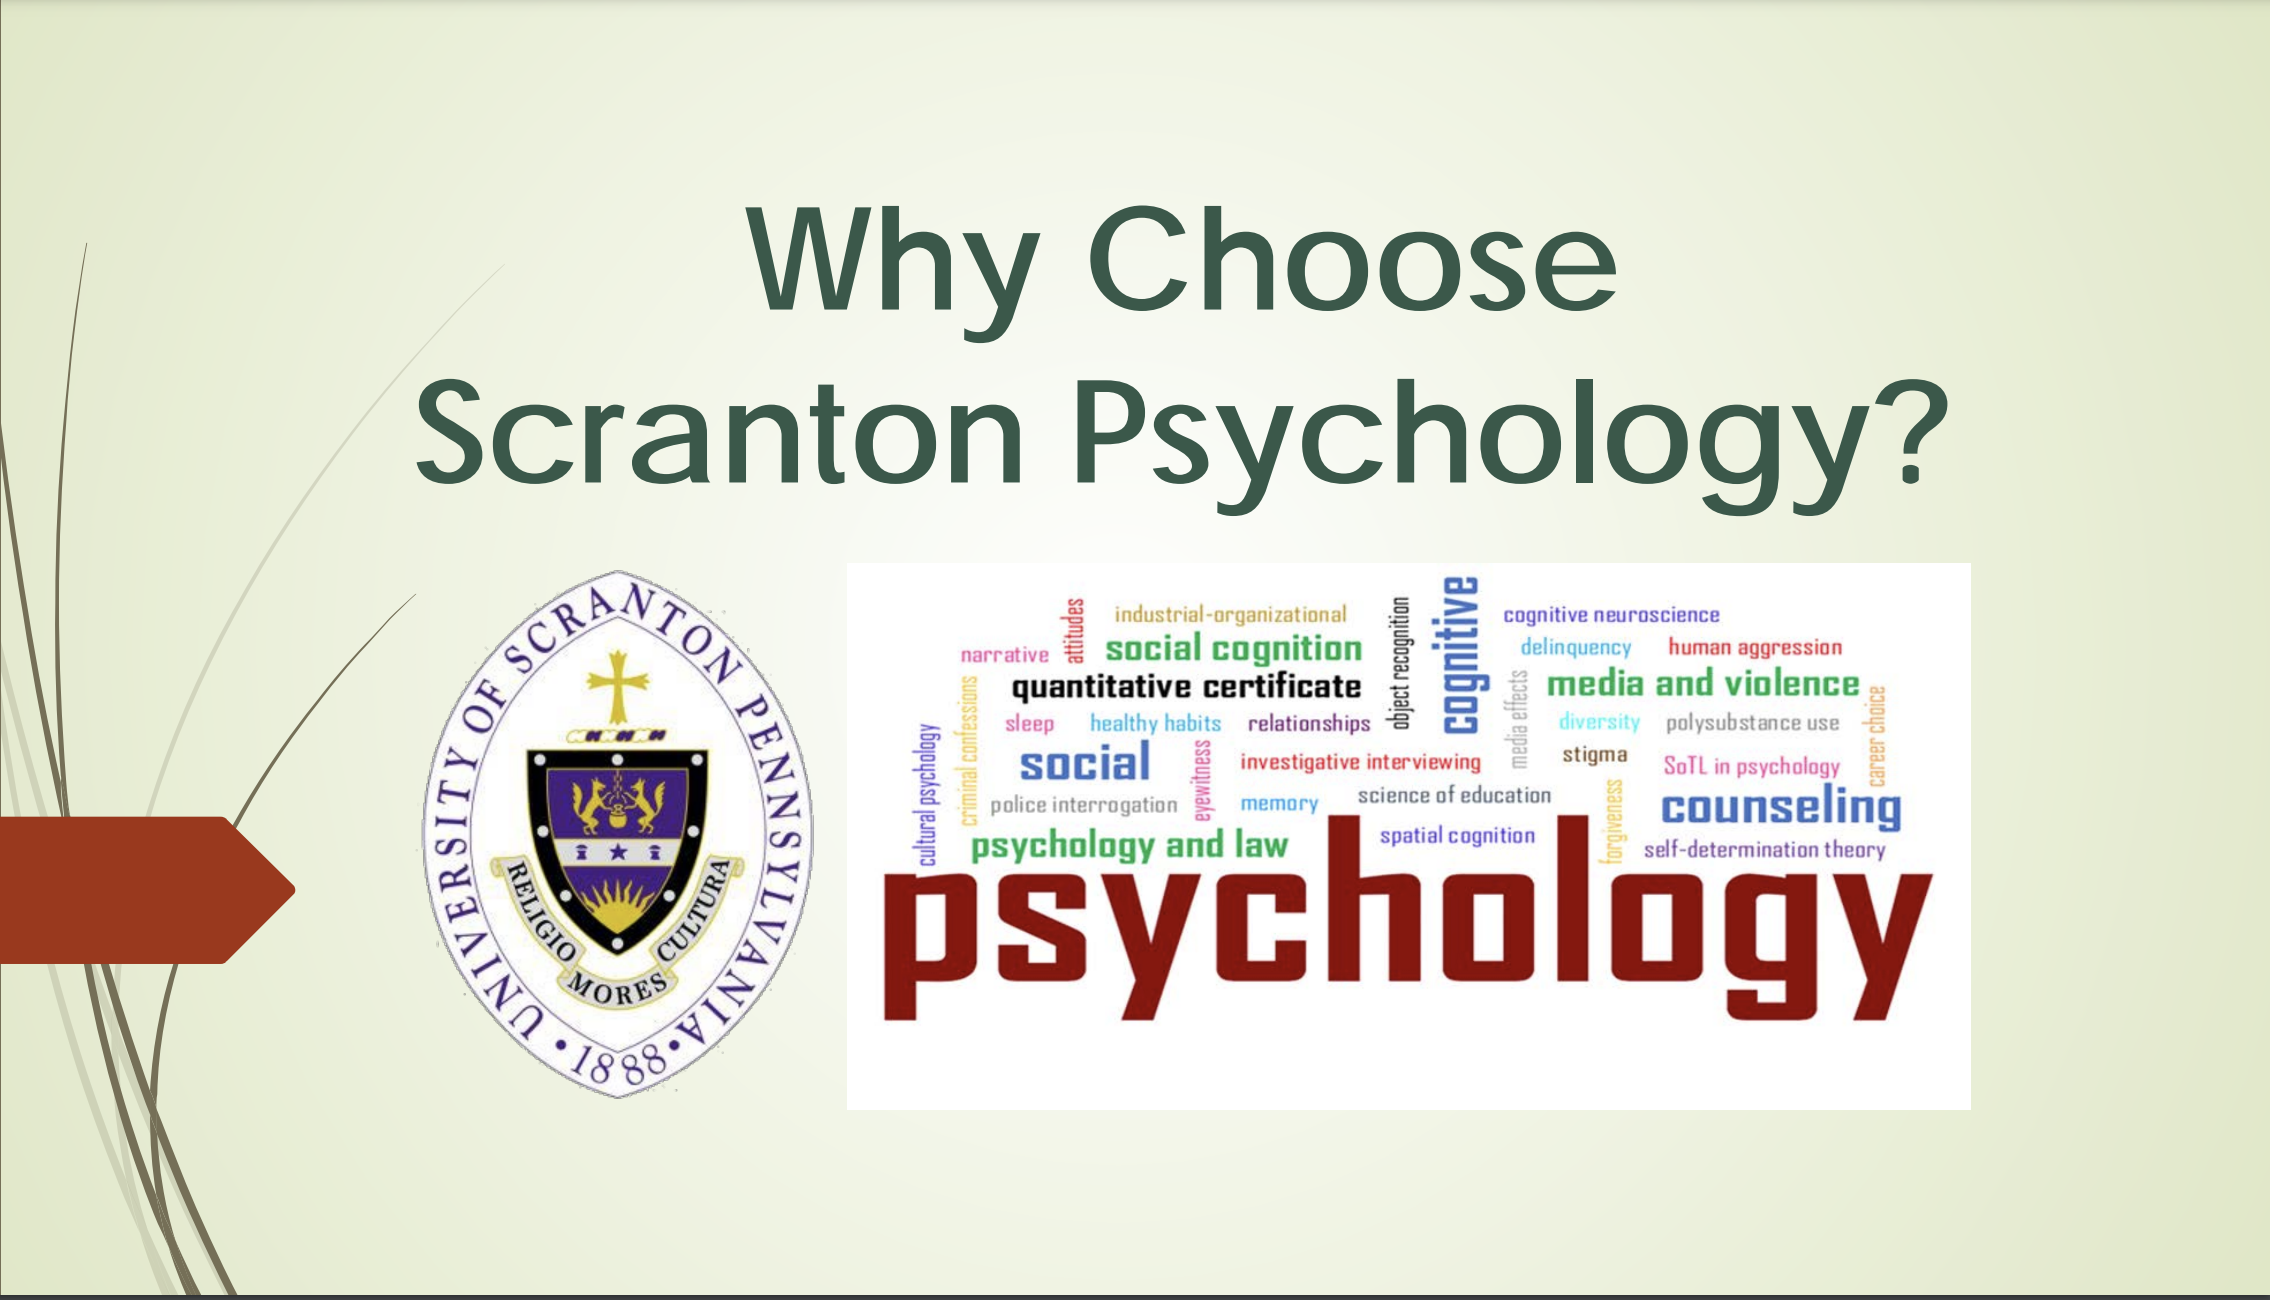 whychoosepsychology.png